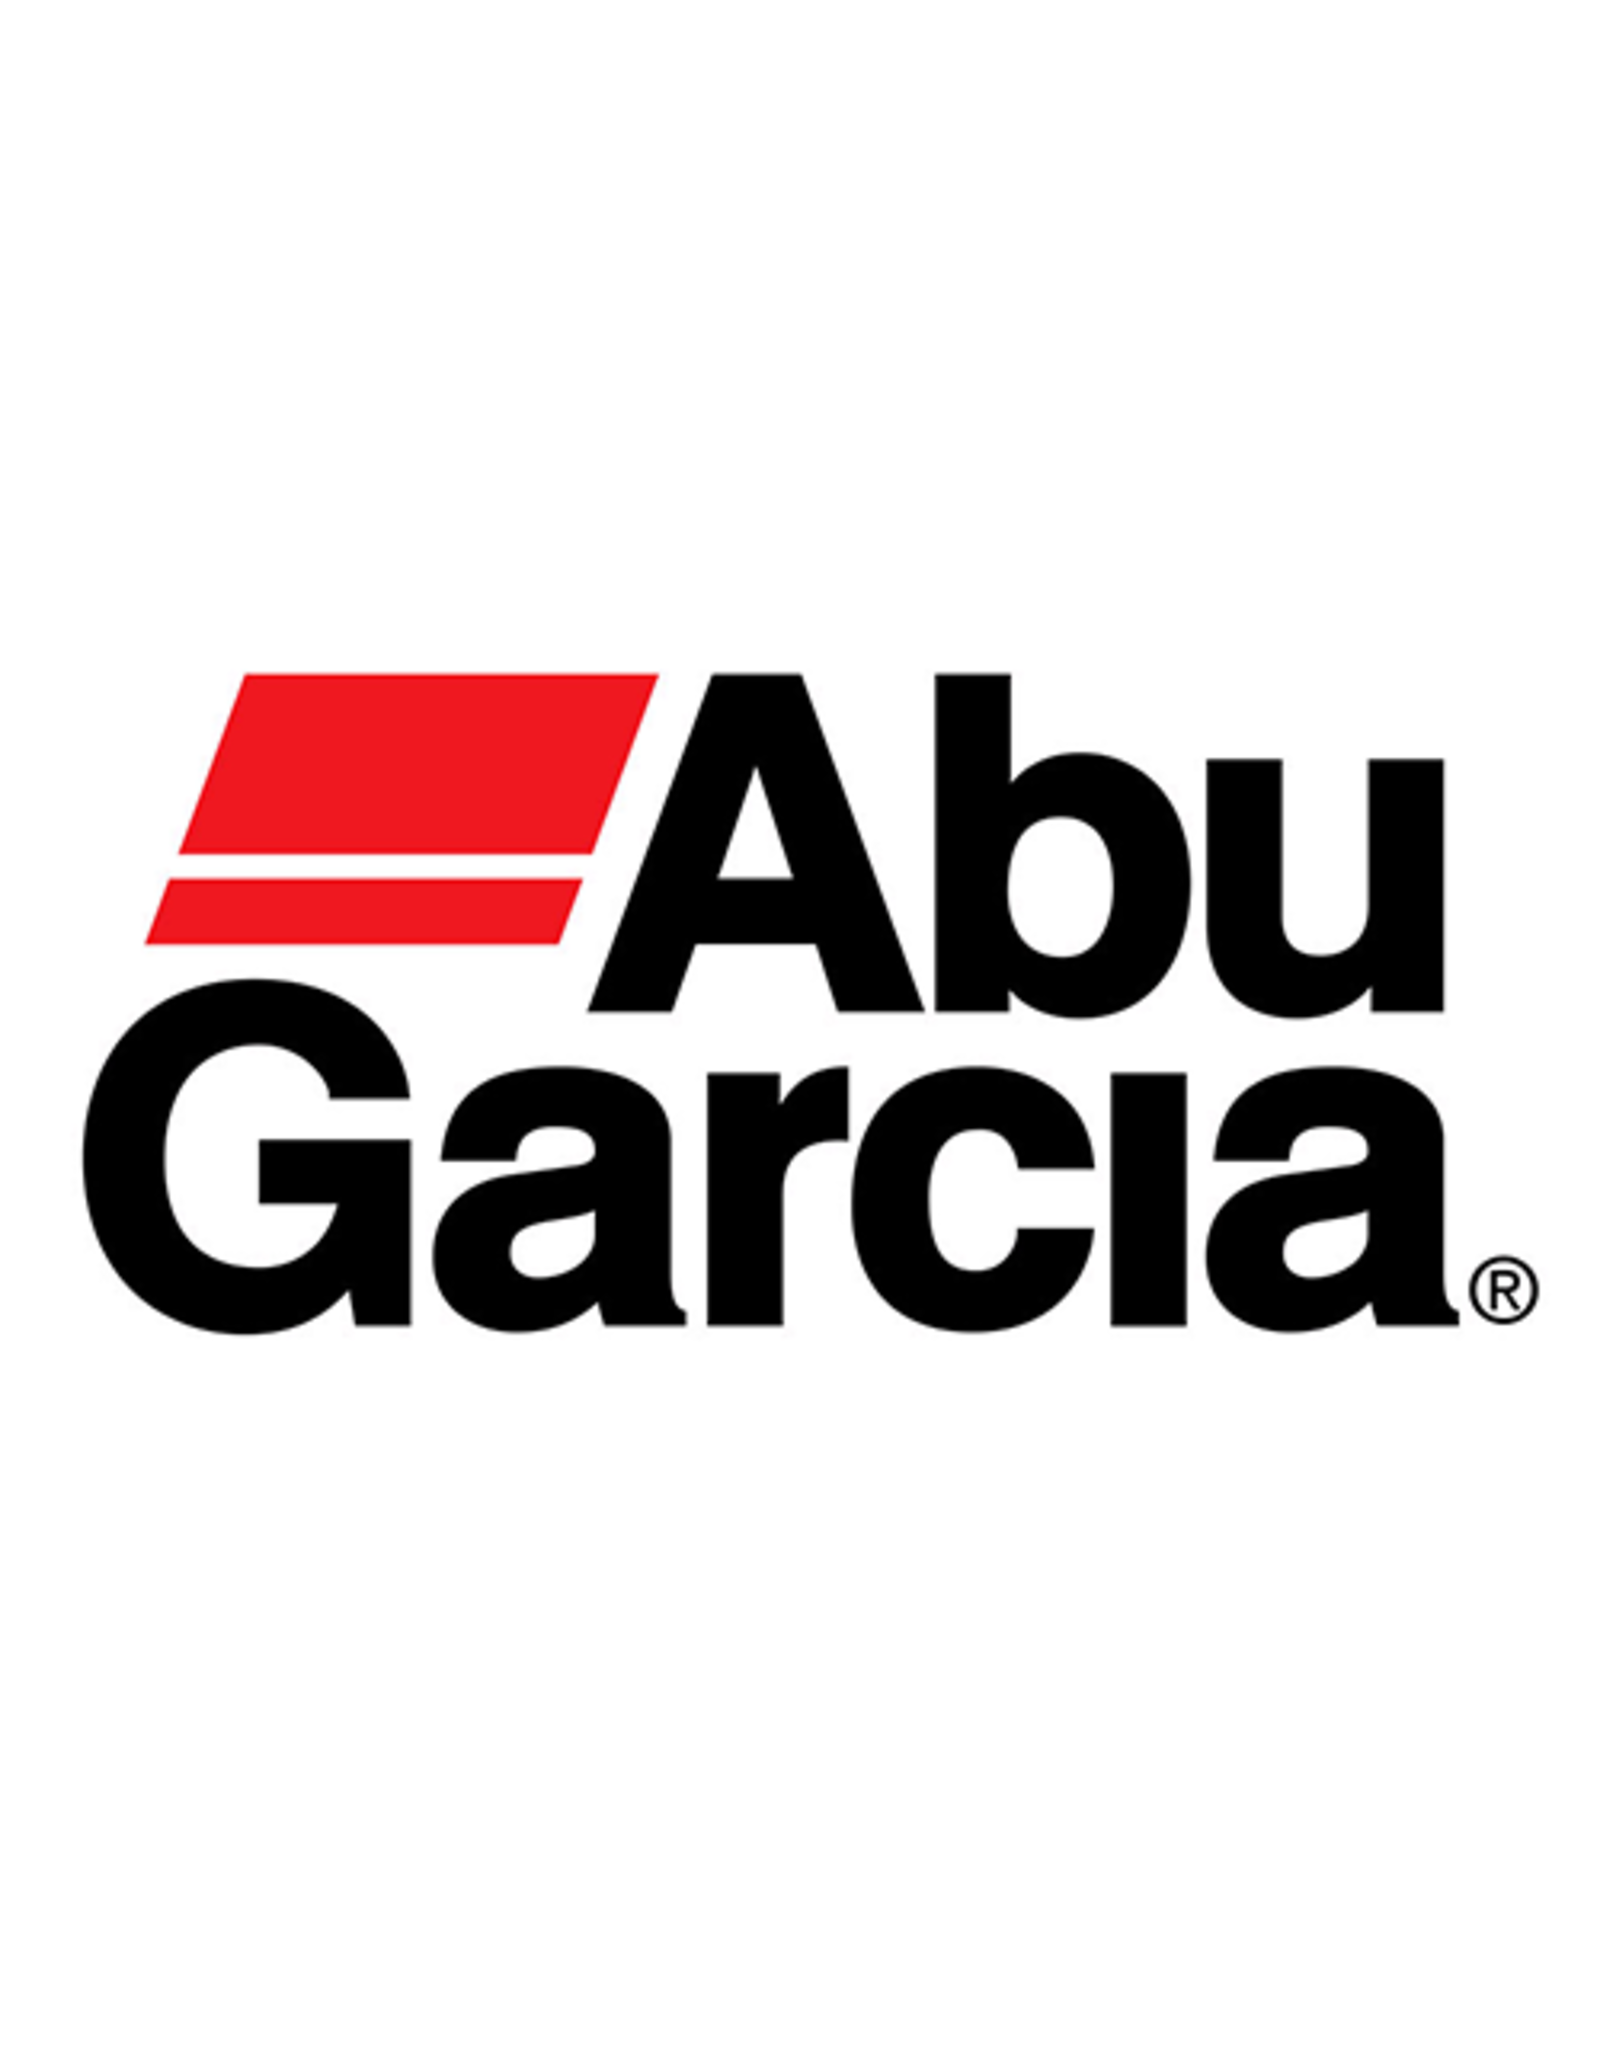 Abu Garcia 1309209  BALL BEARING